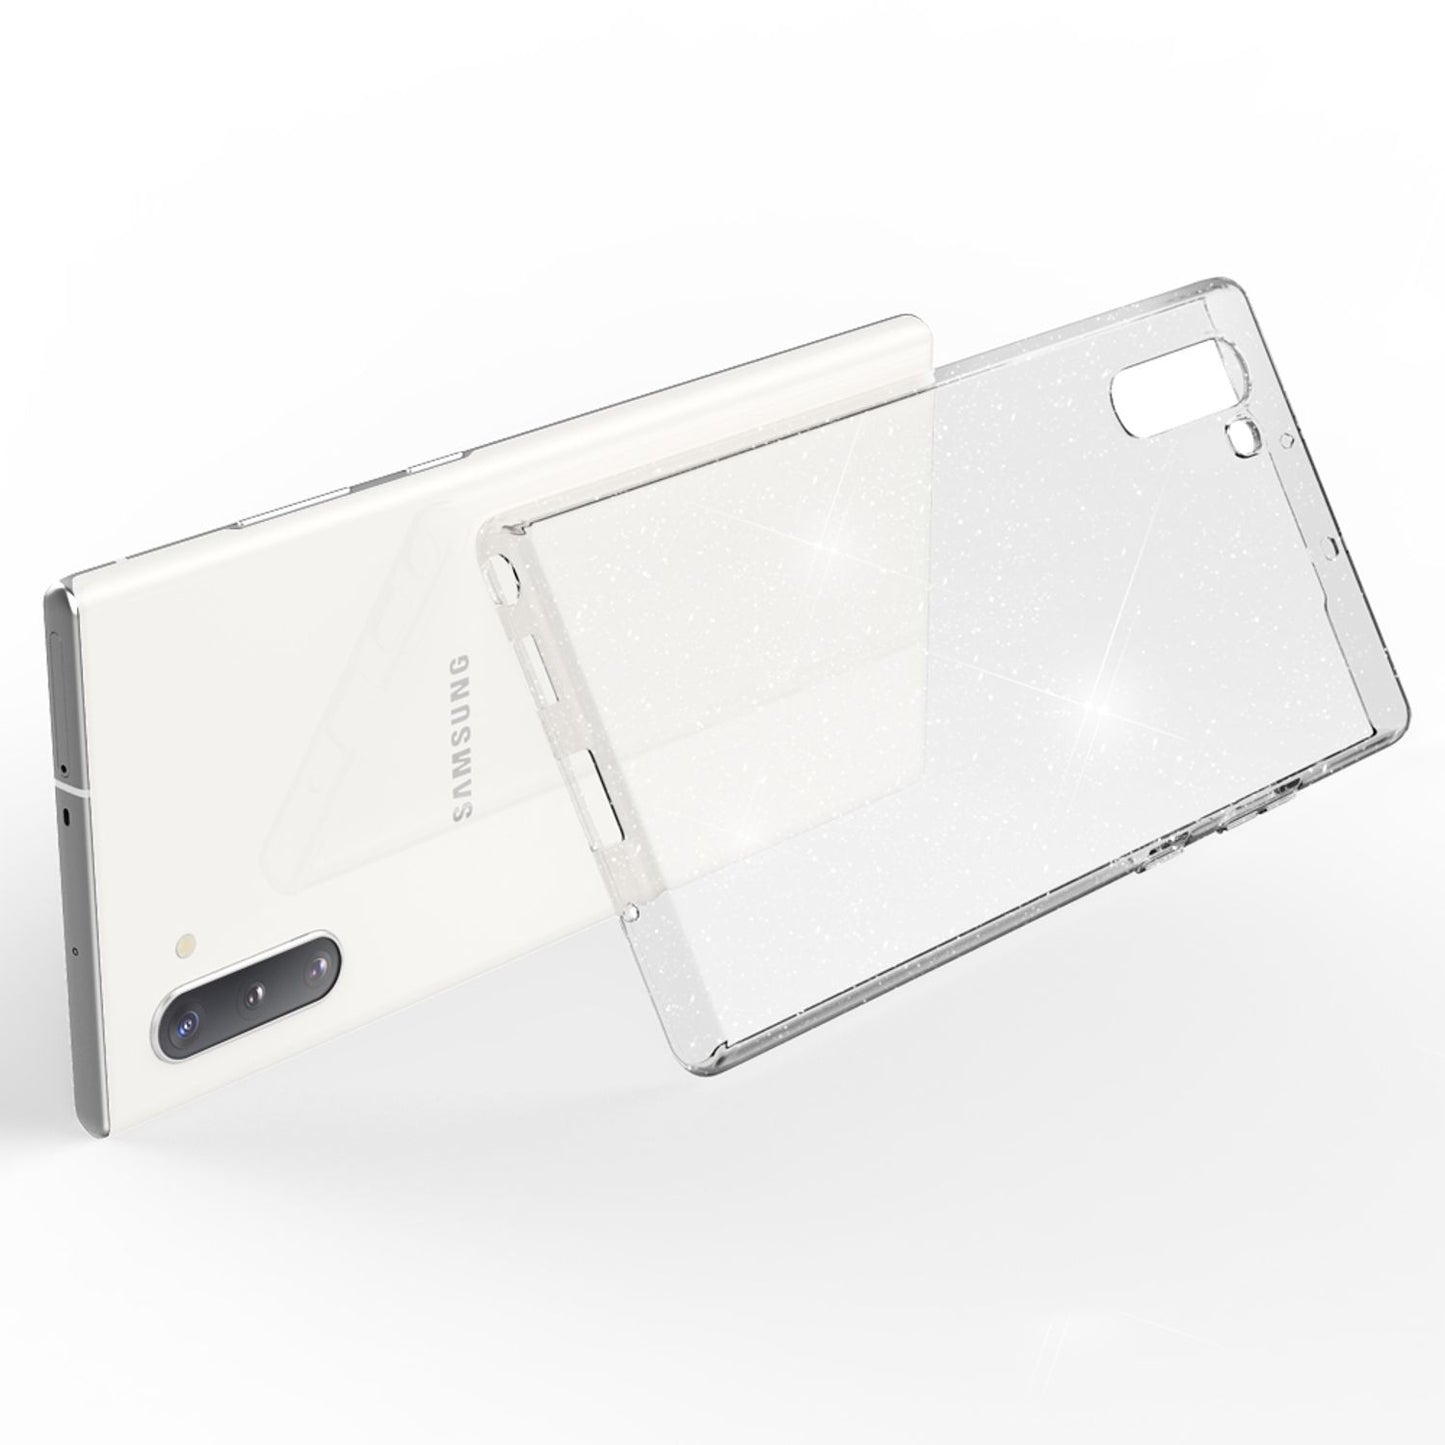 NALIA Glitzer Handyhülle für Samsung Galaxy Note10 Hülle, Bling Silikon Handyhülle